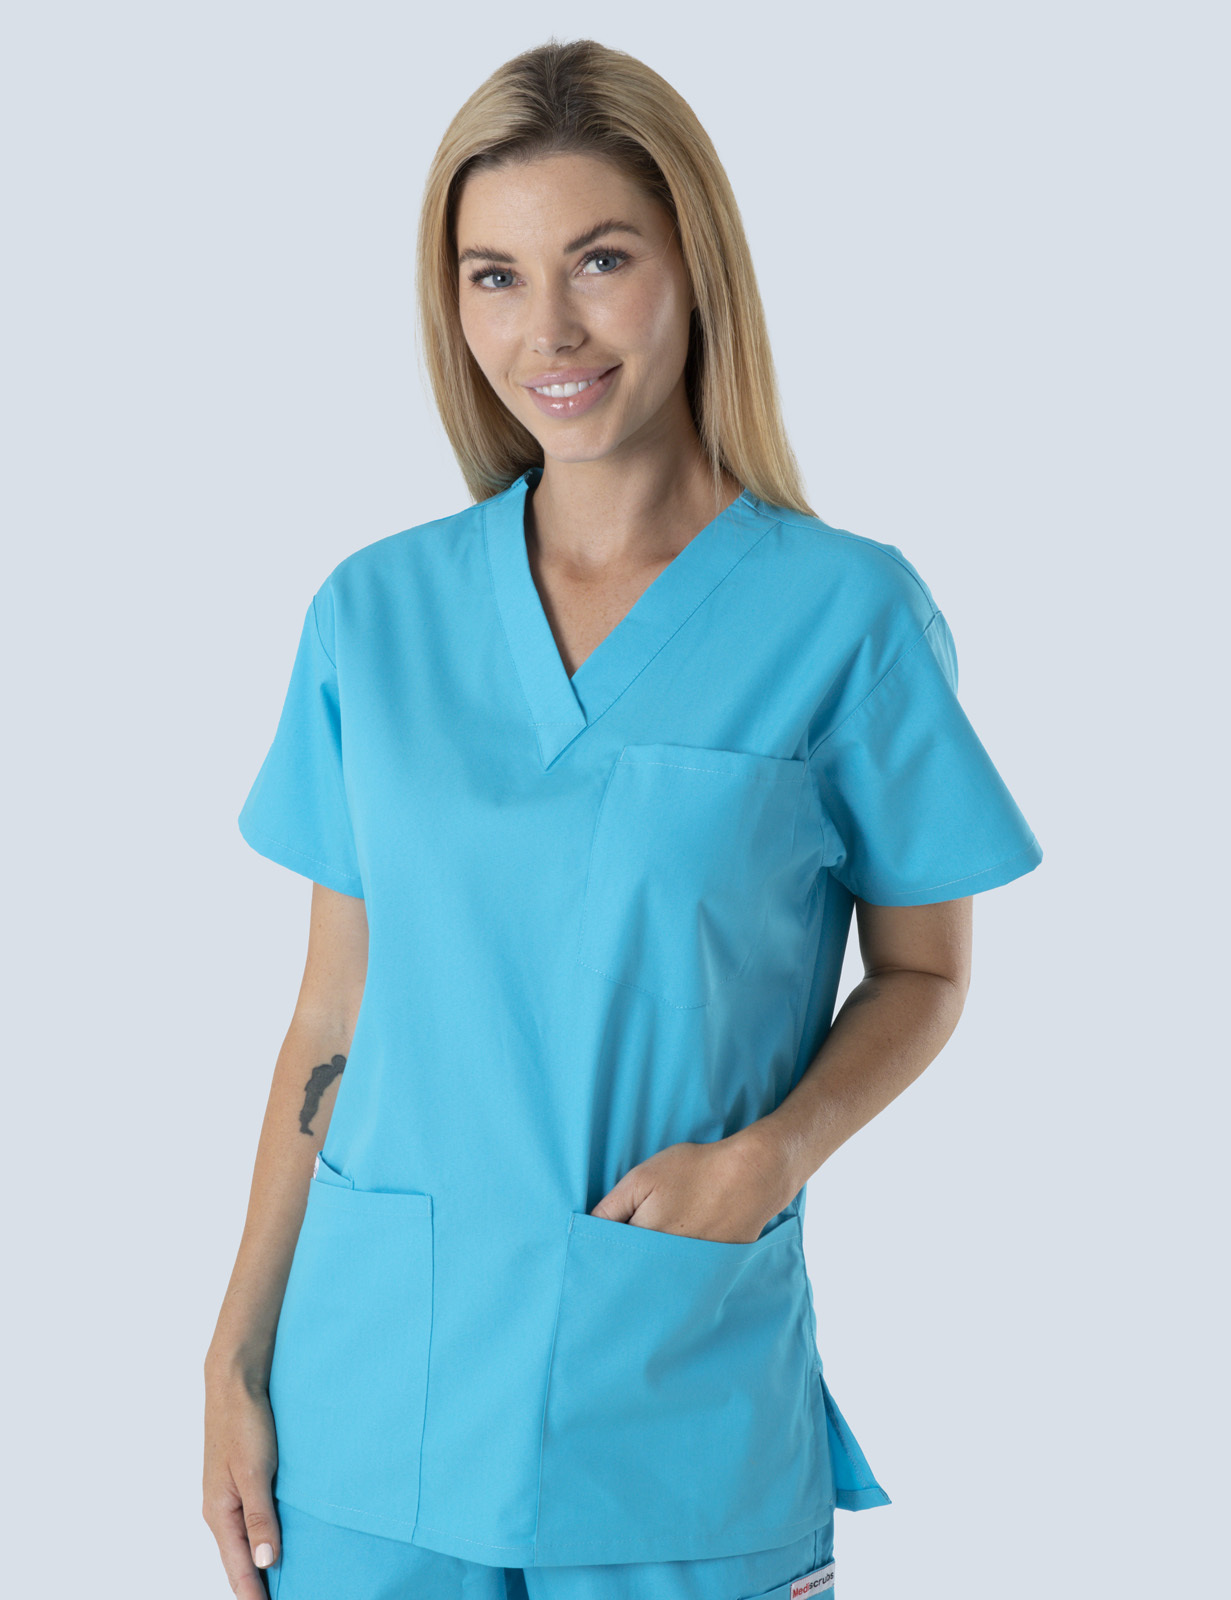 Queensland Children's Hospital Emergency Department Assistant in Nursing  Uniform Top Bundle  (4 Pocket Top in Aqua incl Logos)